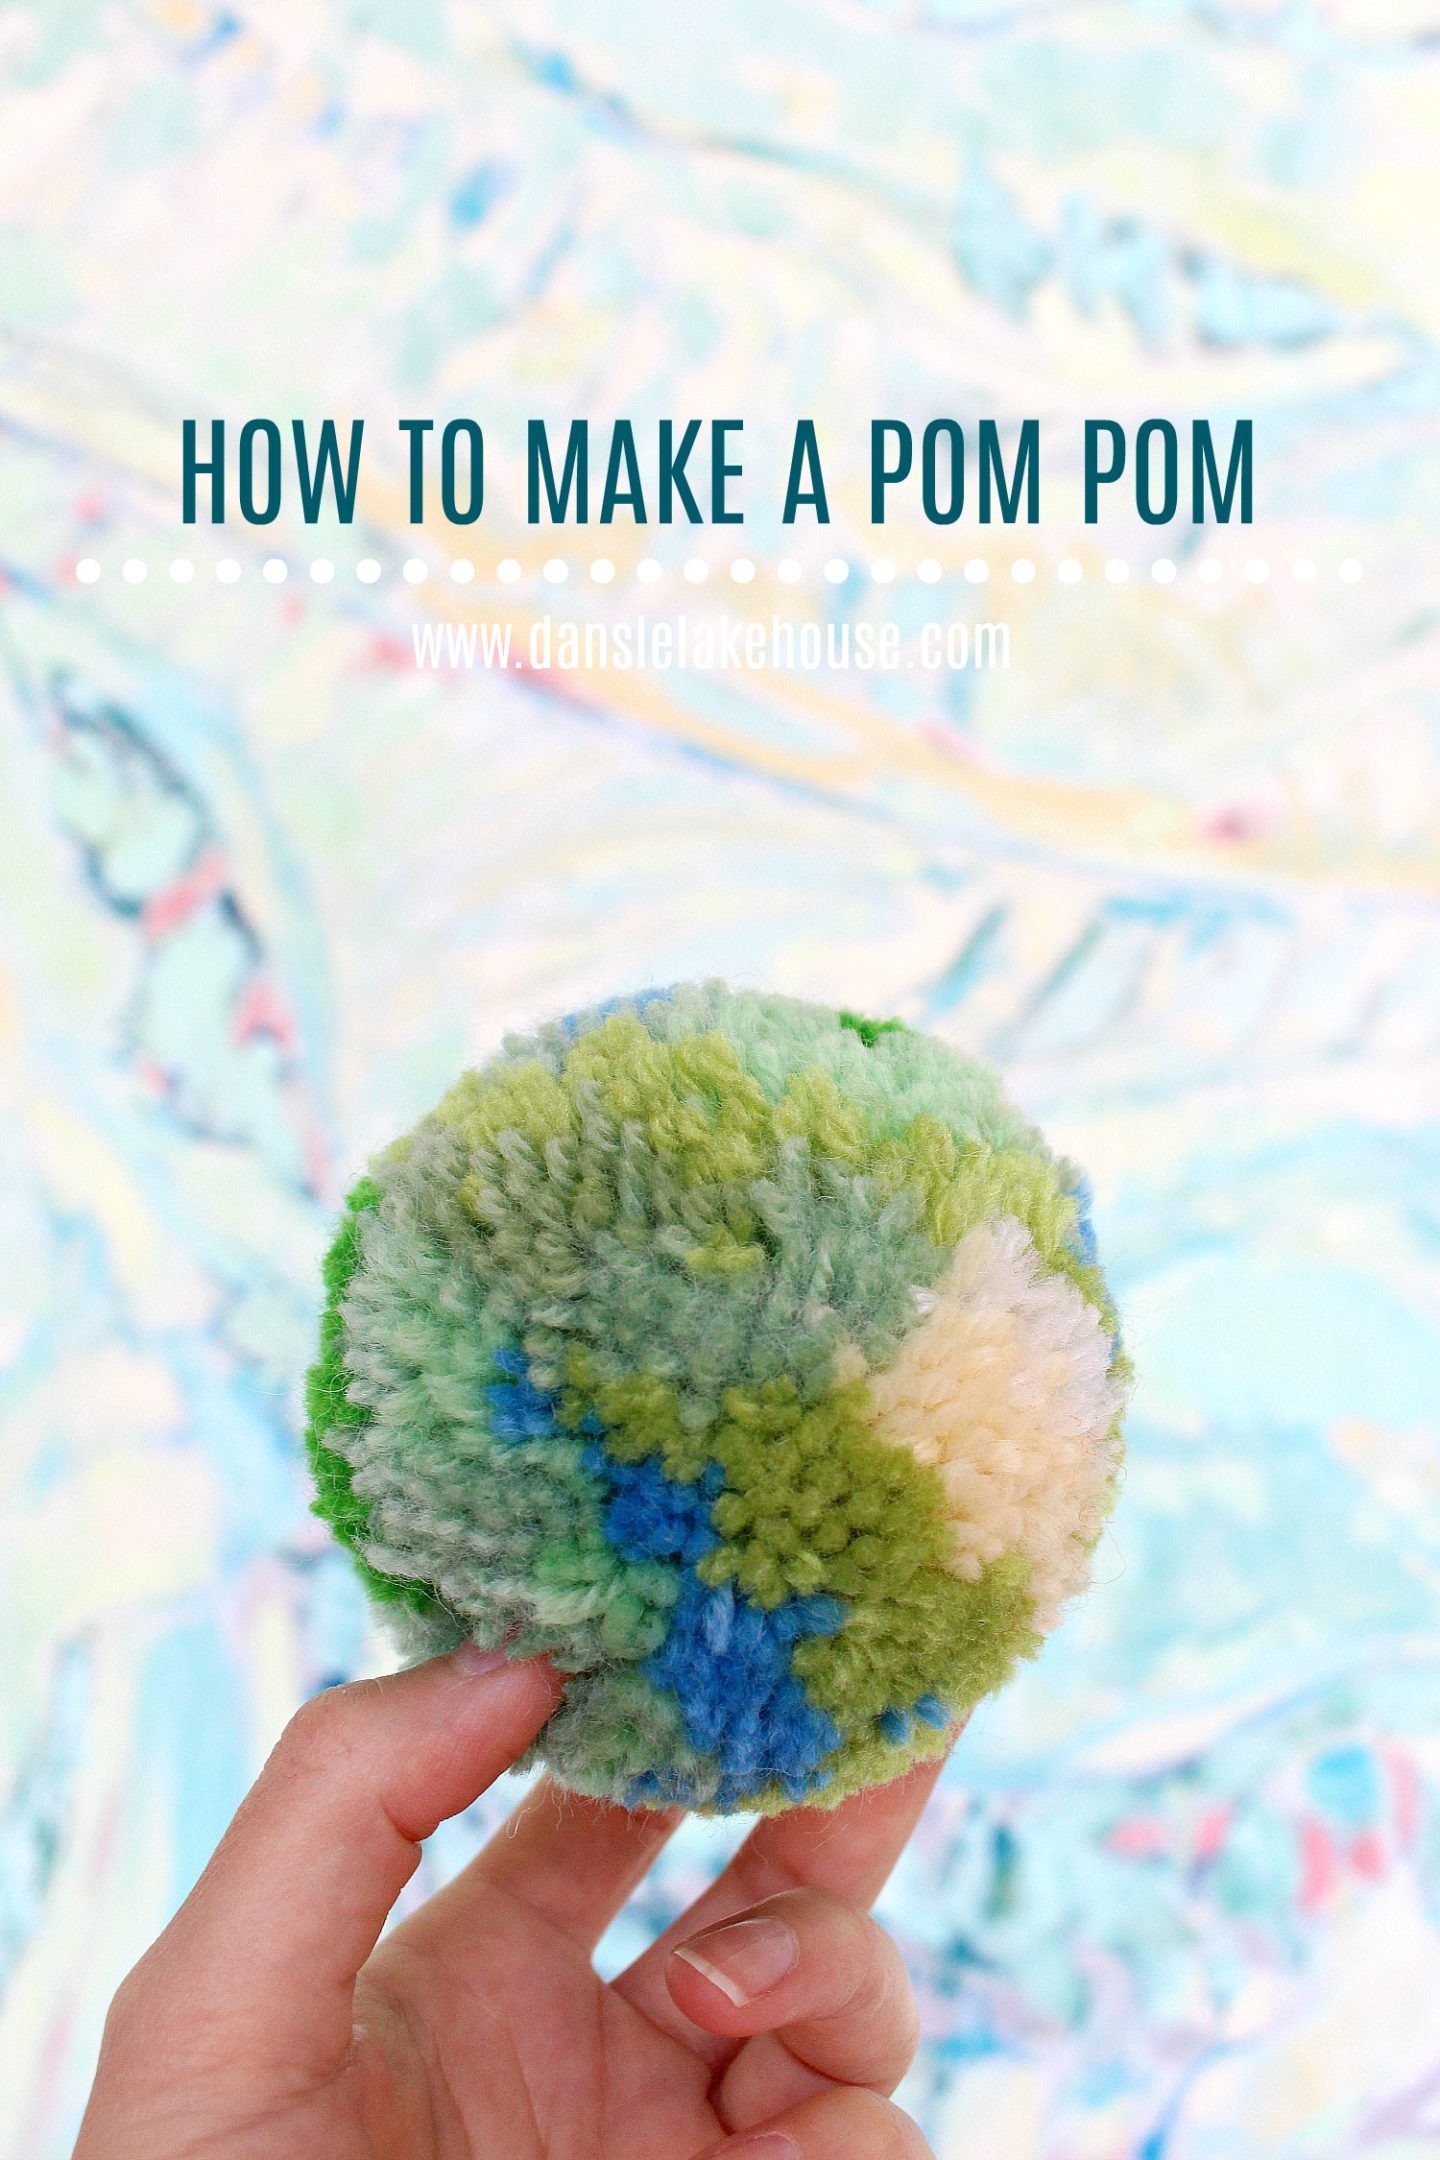 How to Make a Multi-Colored Pom Pom